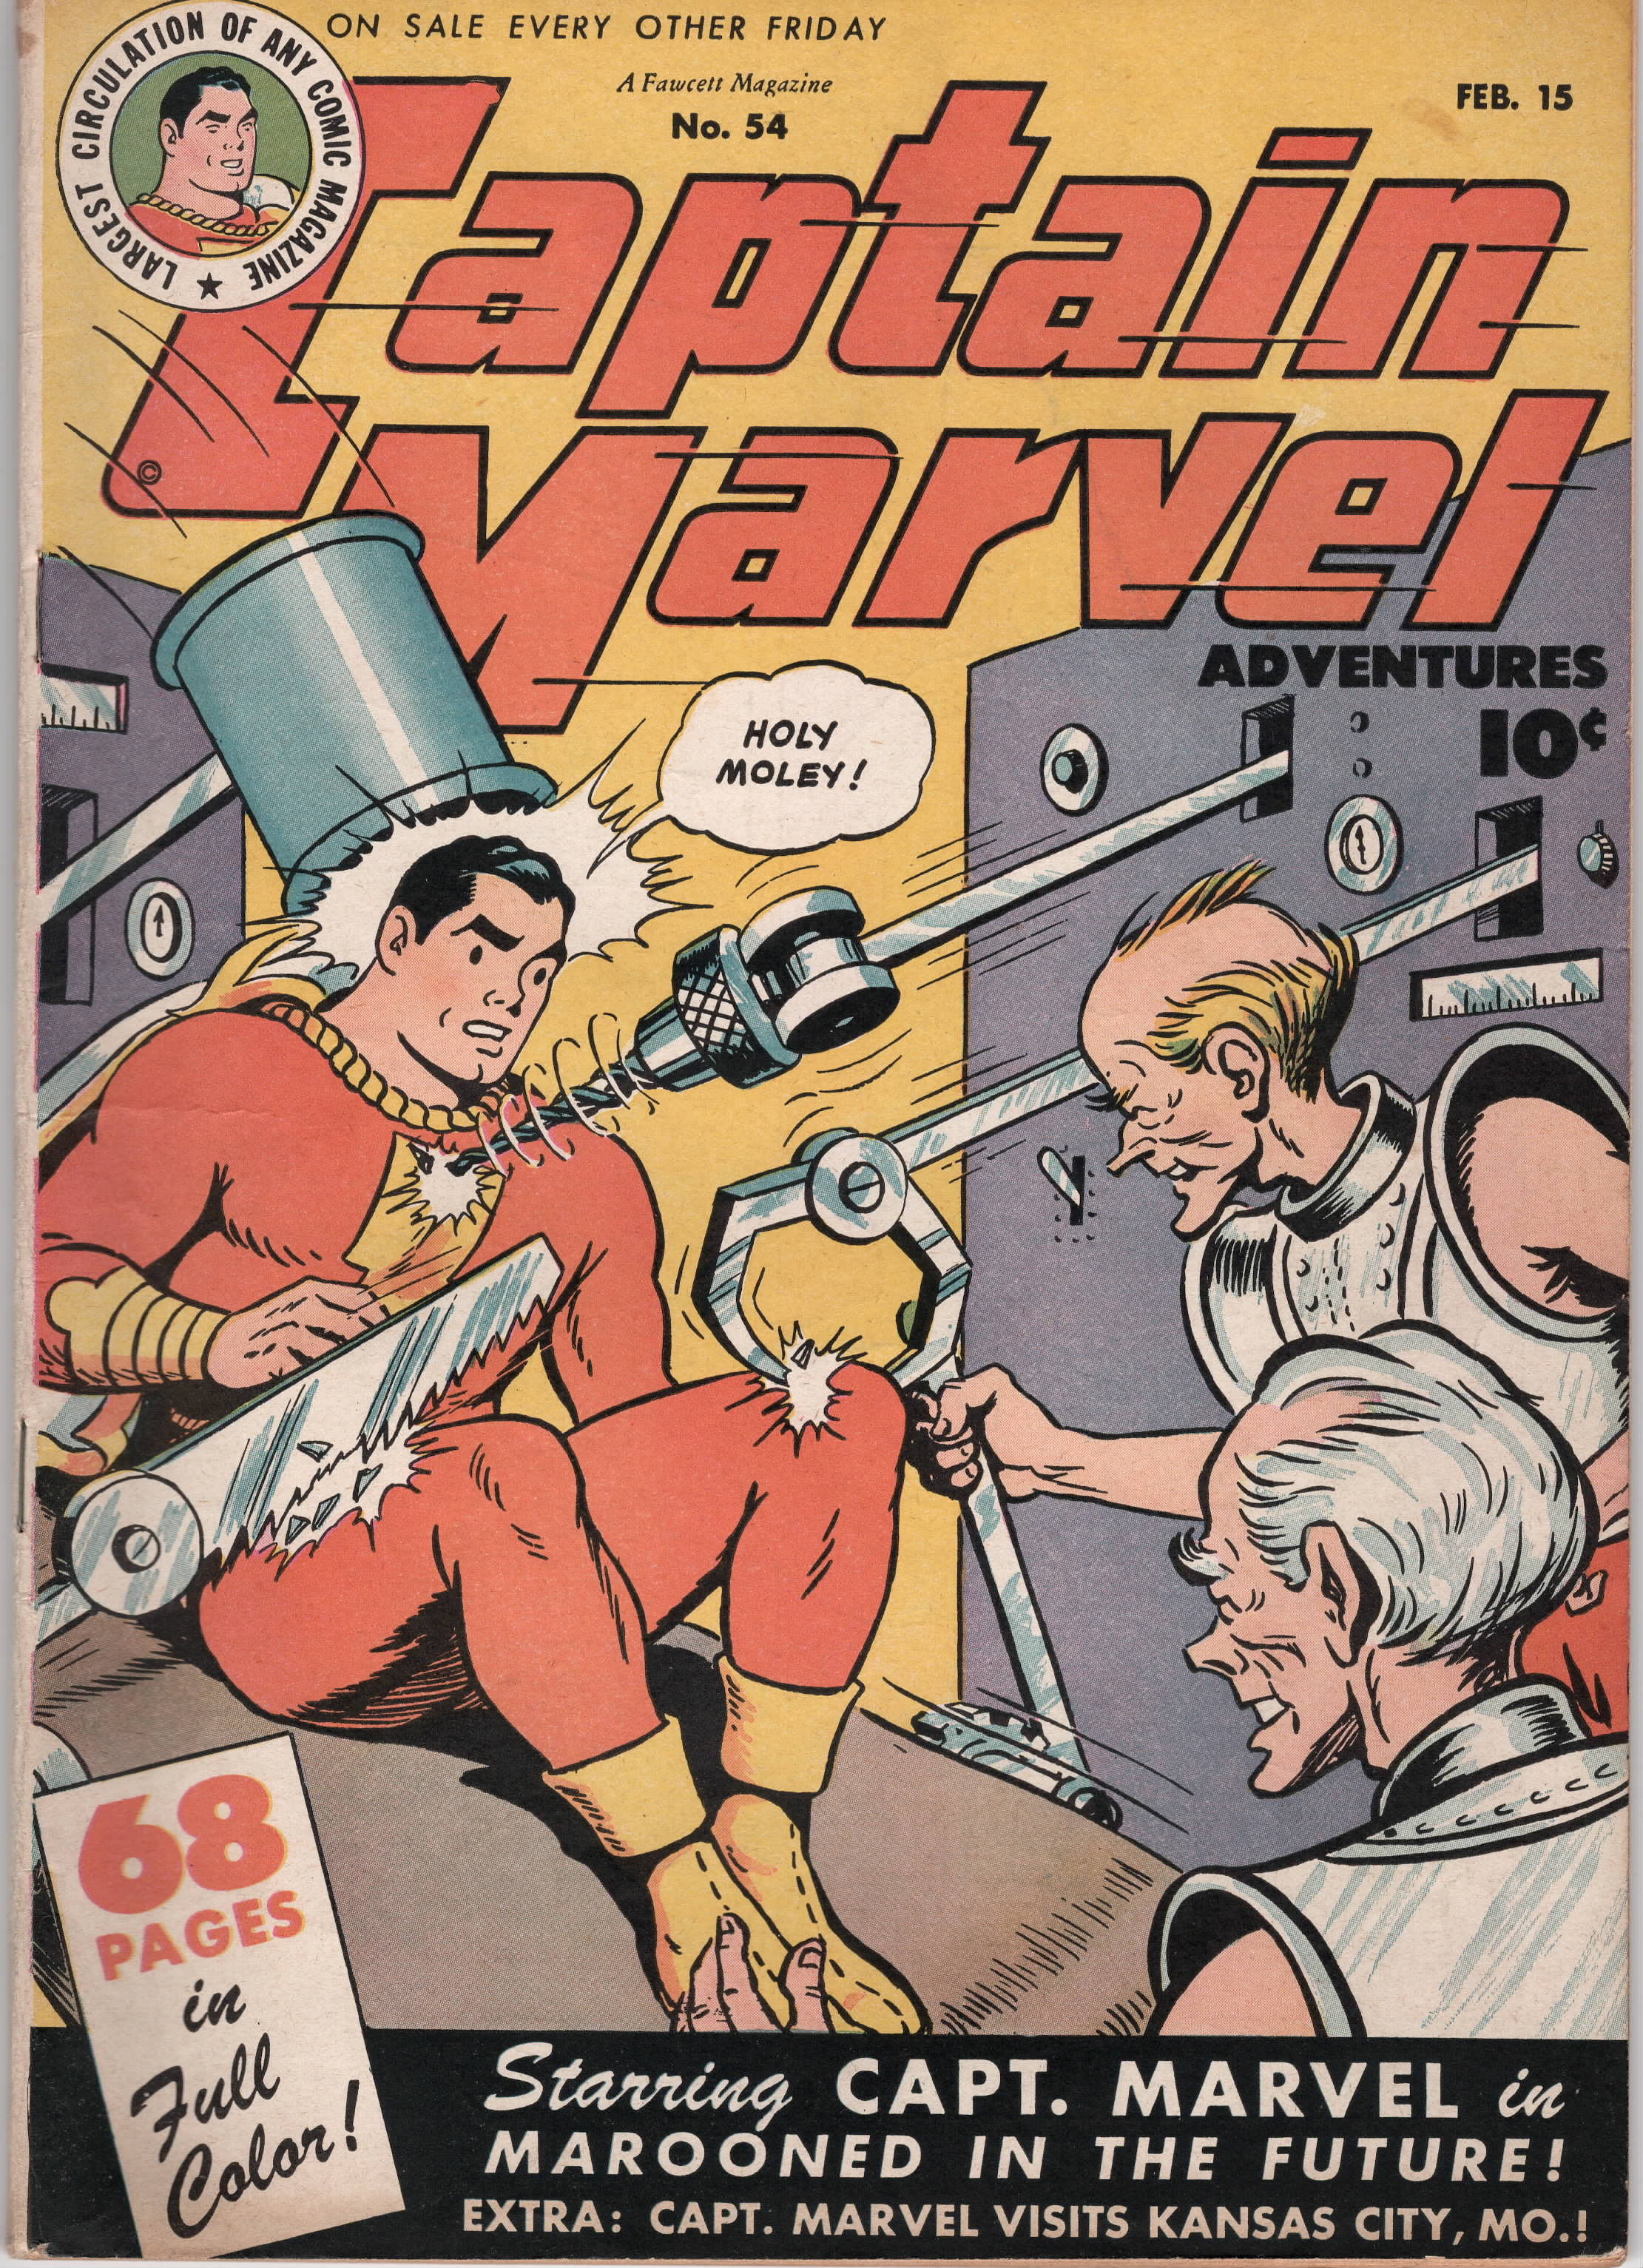 Captain Marvel Adventures #054